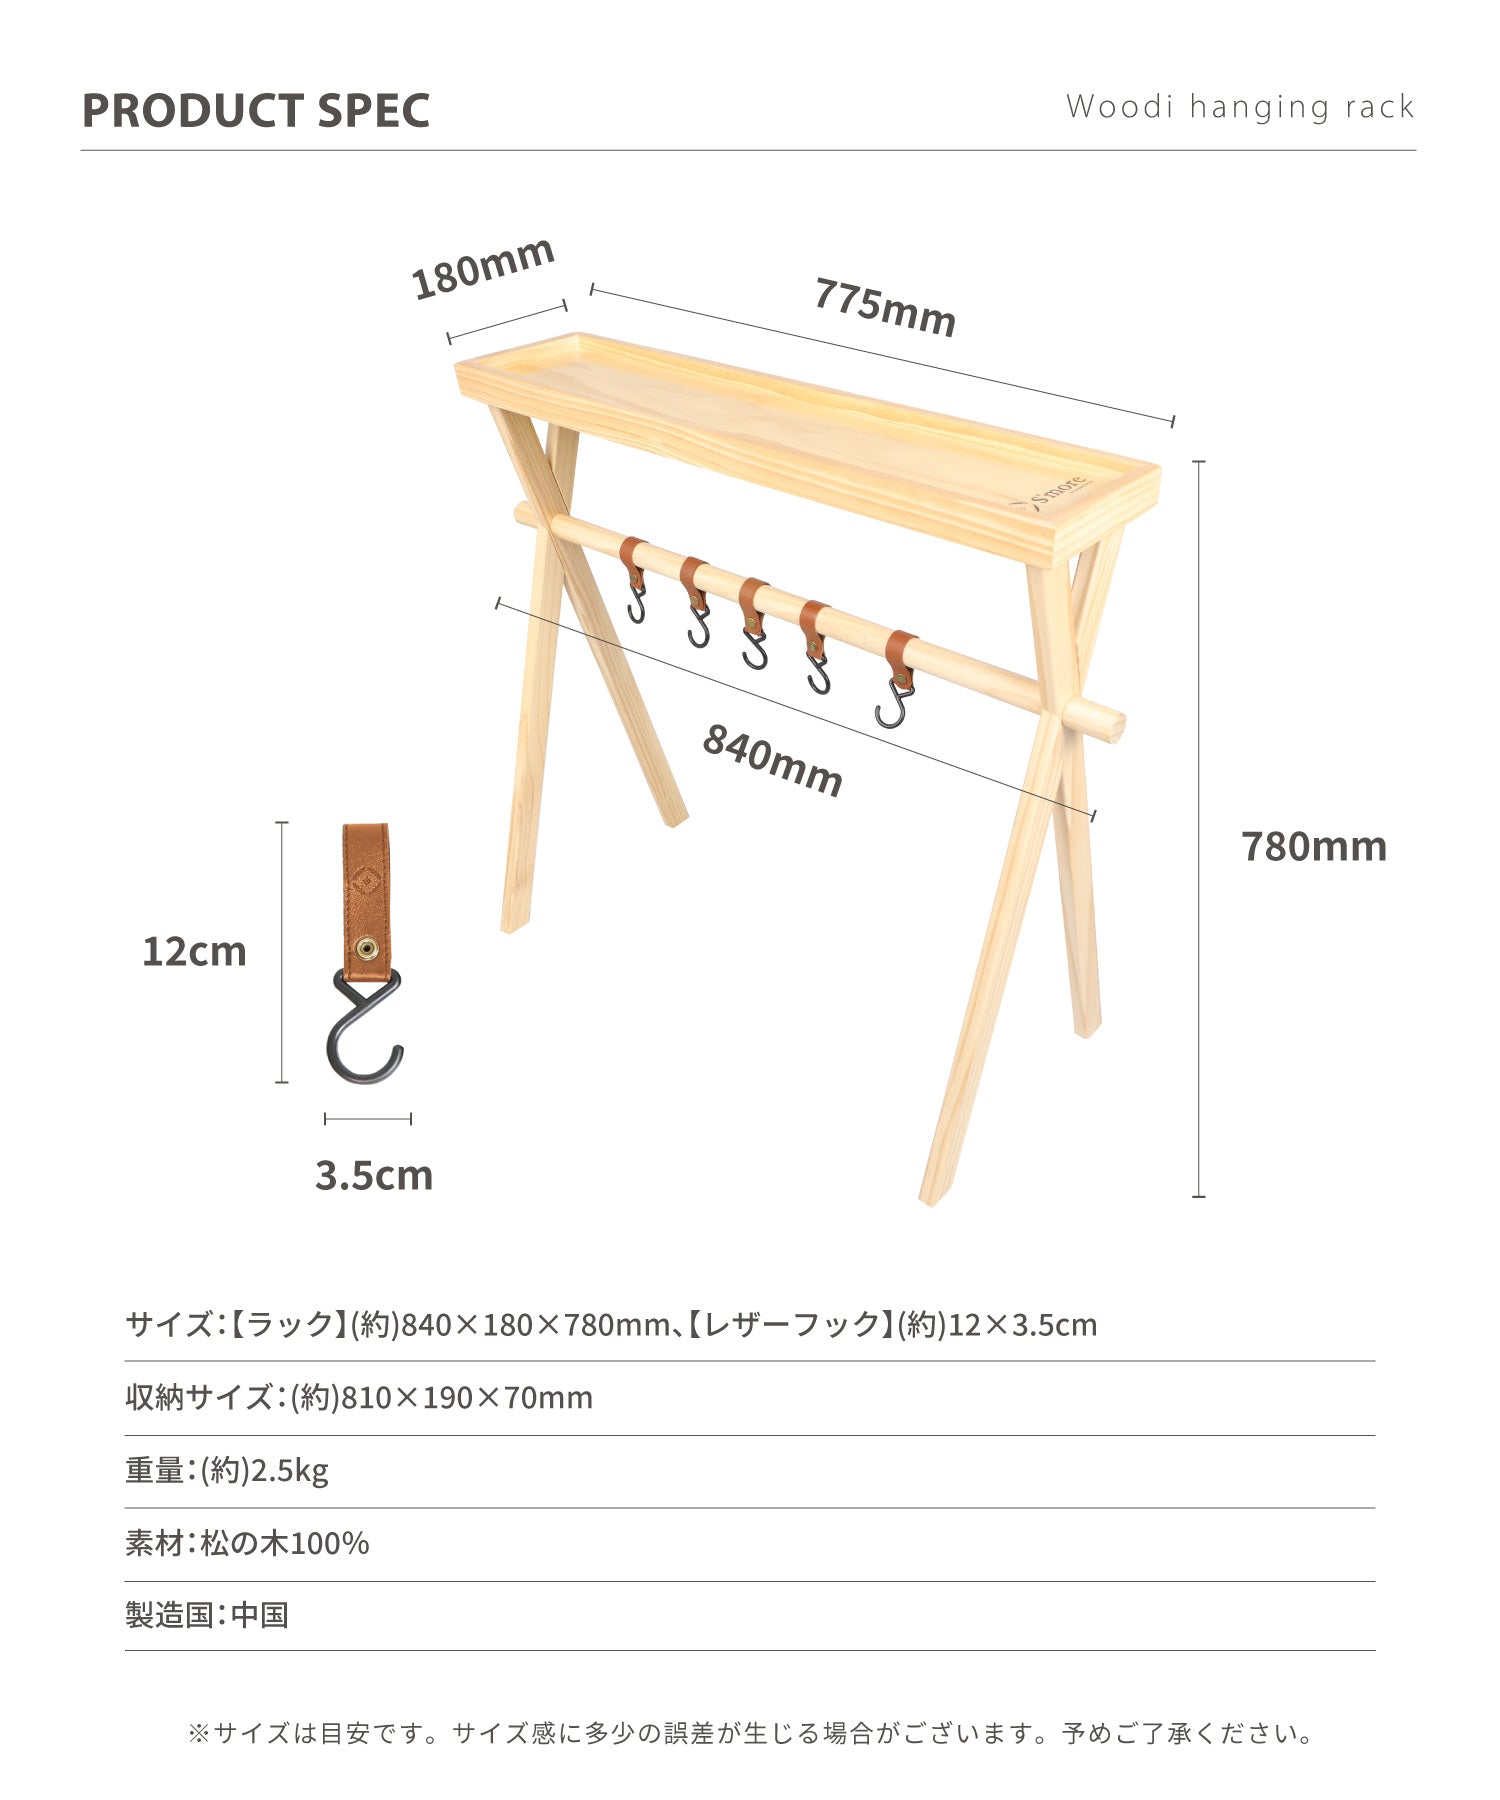 Woodi hanging rack ( ウッディハンギングラック ) – S'more